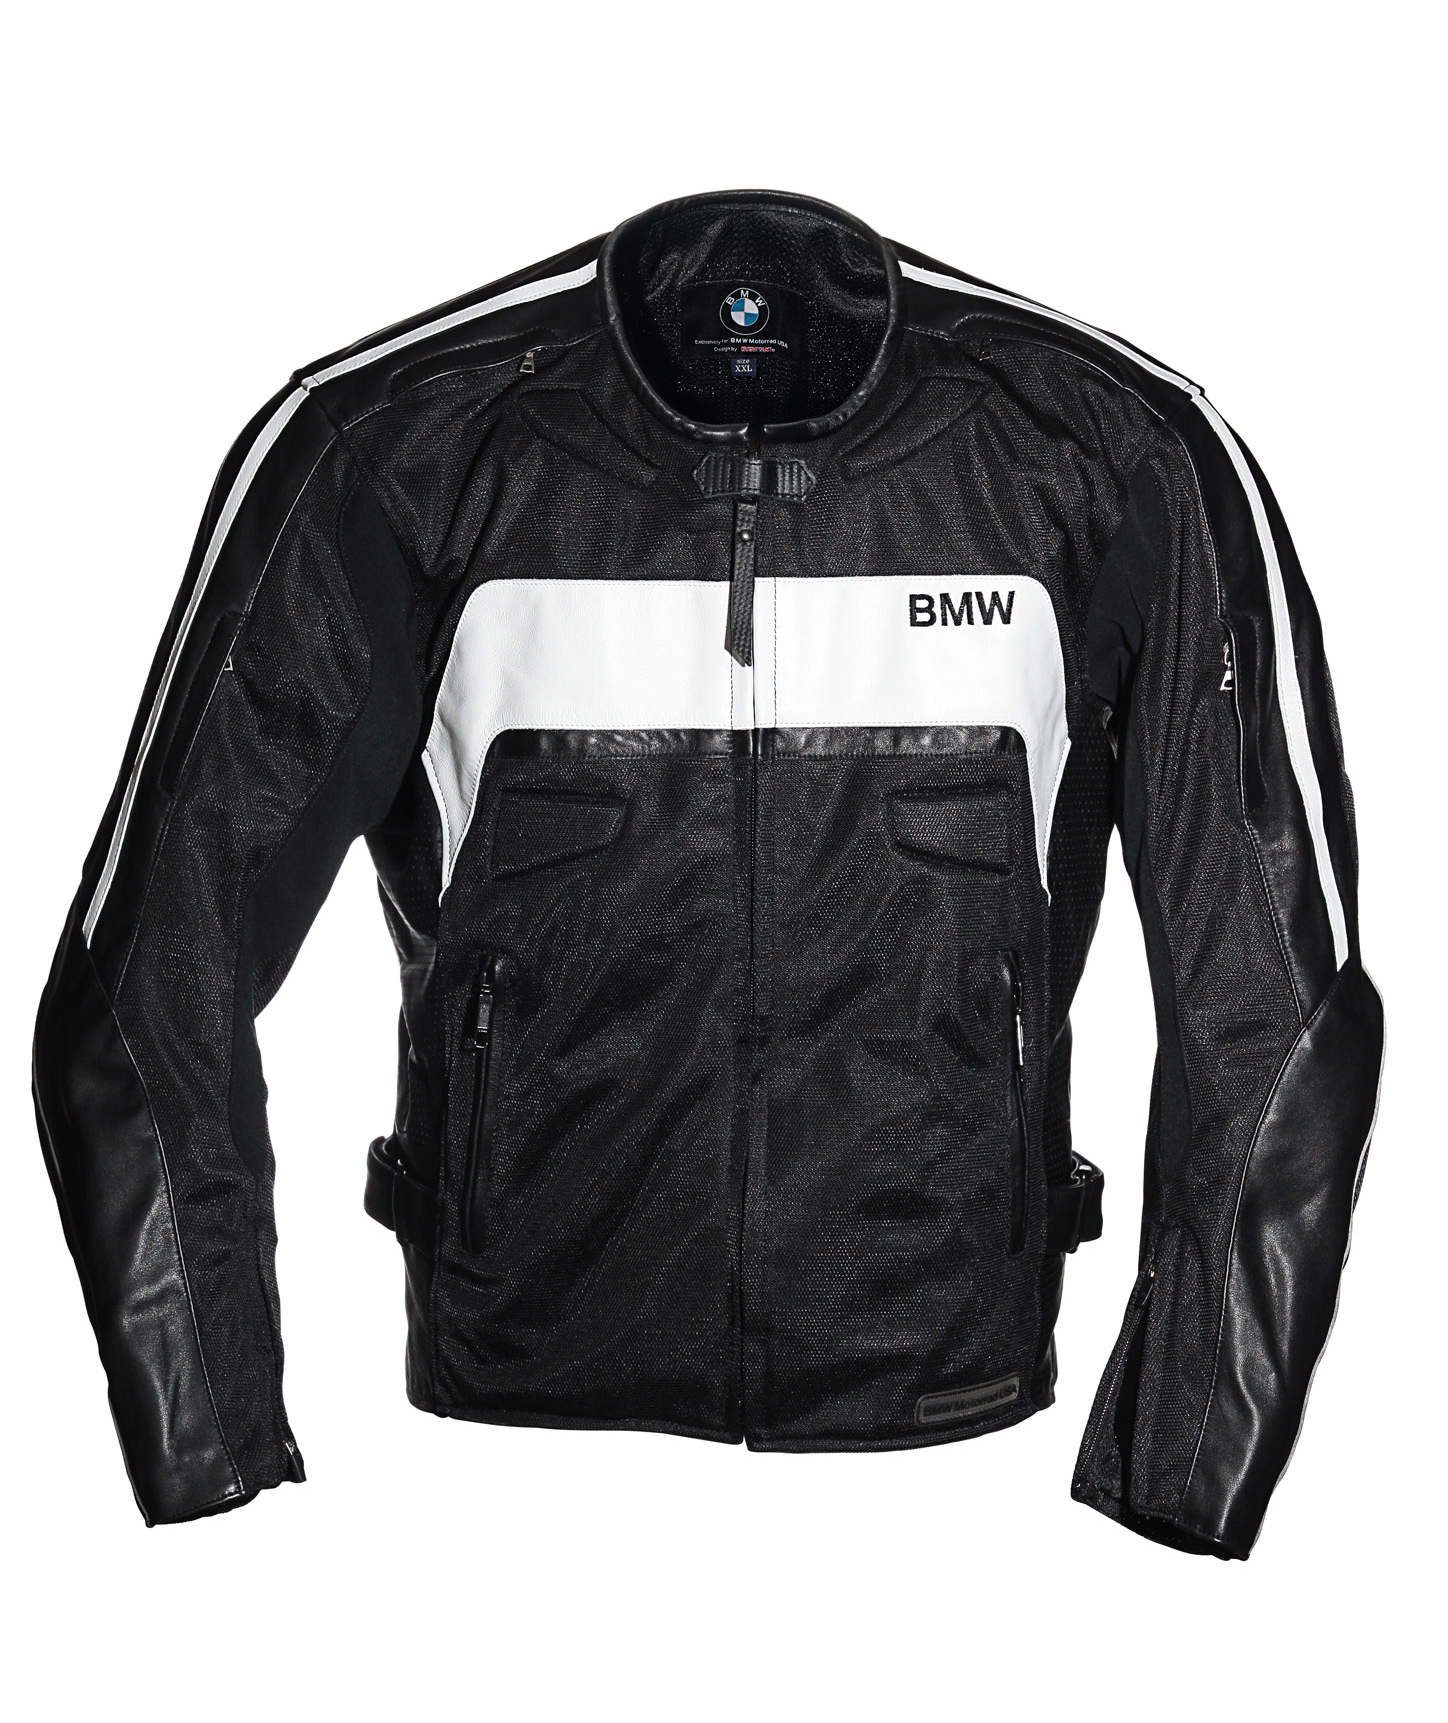 Bmw airflow 3 jacket sizing